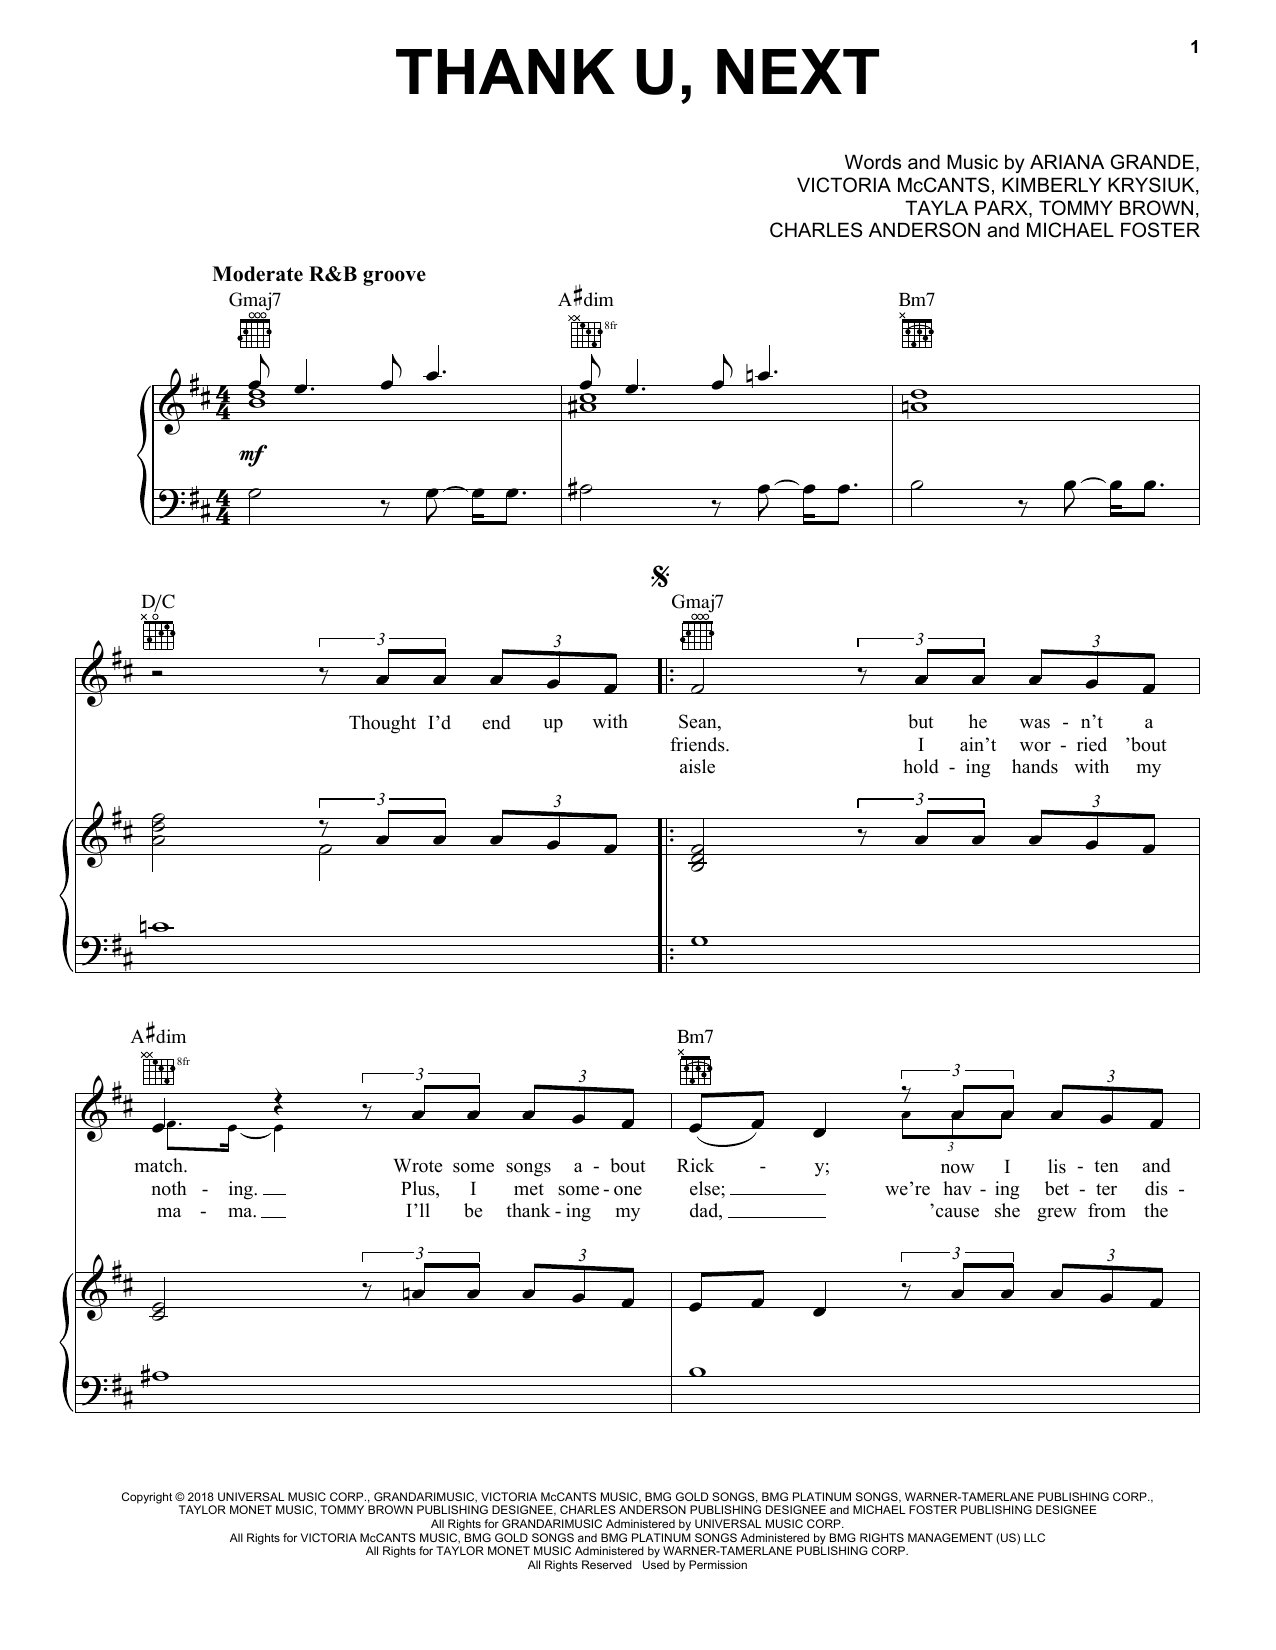 Ariana Grande thank u, next Sheet Music Notes & Chords for Ukulele - Download or Print PDF